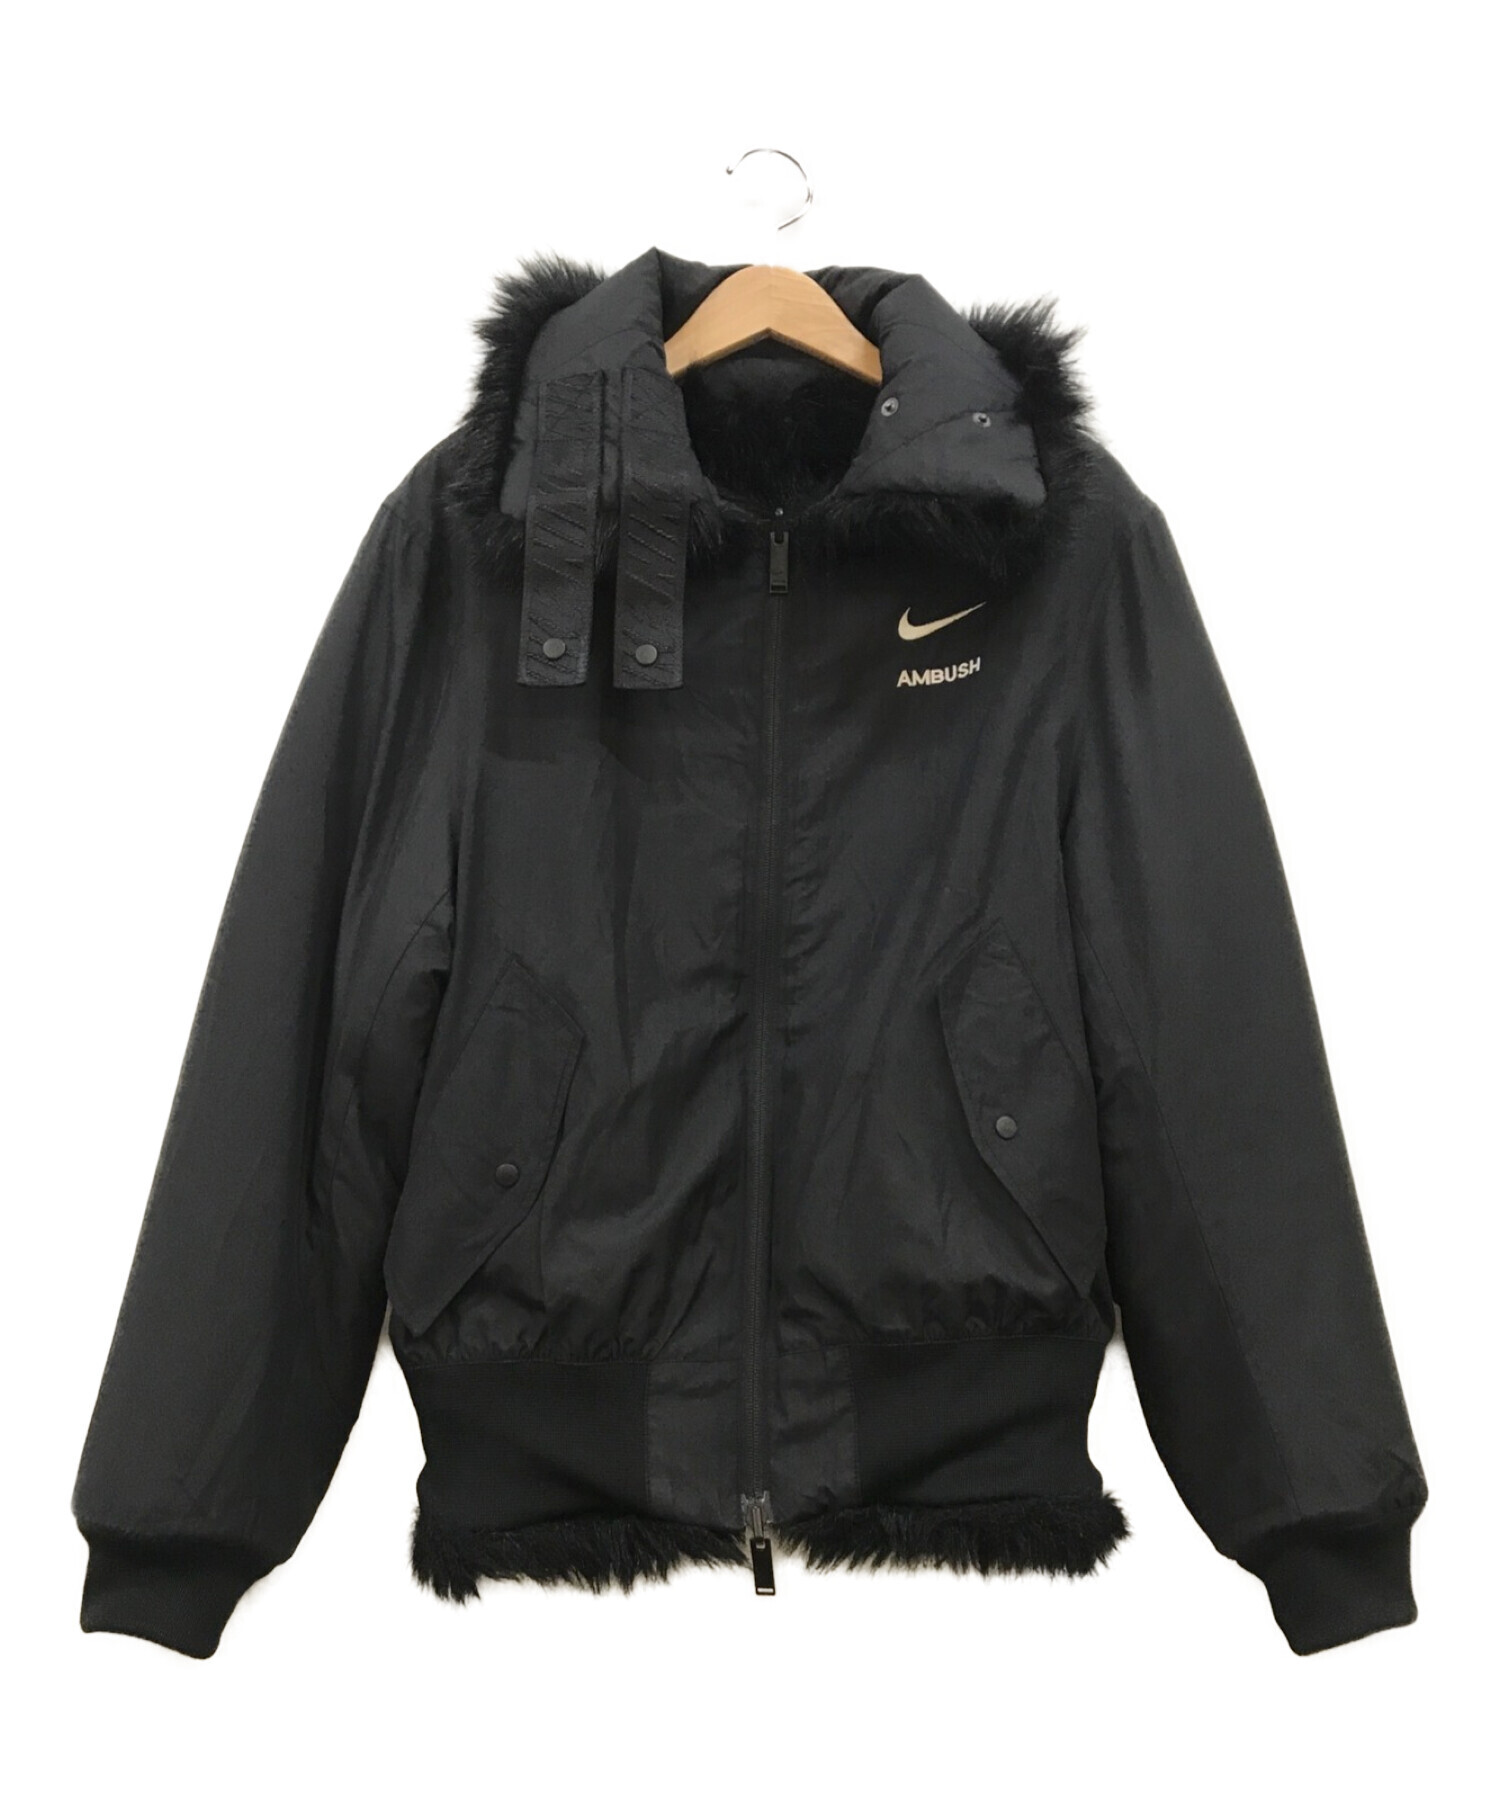 NIKE (ナイキ) AMBUSH (アンブッシュ) Reversible Faux Fur Coat Jacket ブラック サイズ:XS